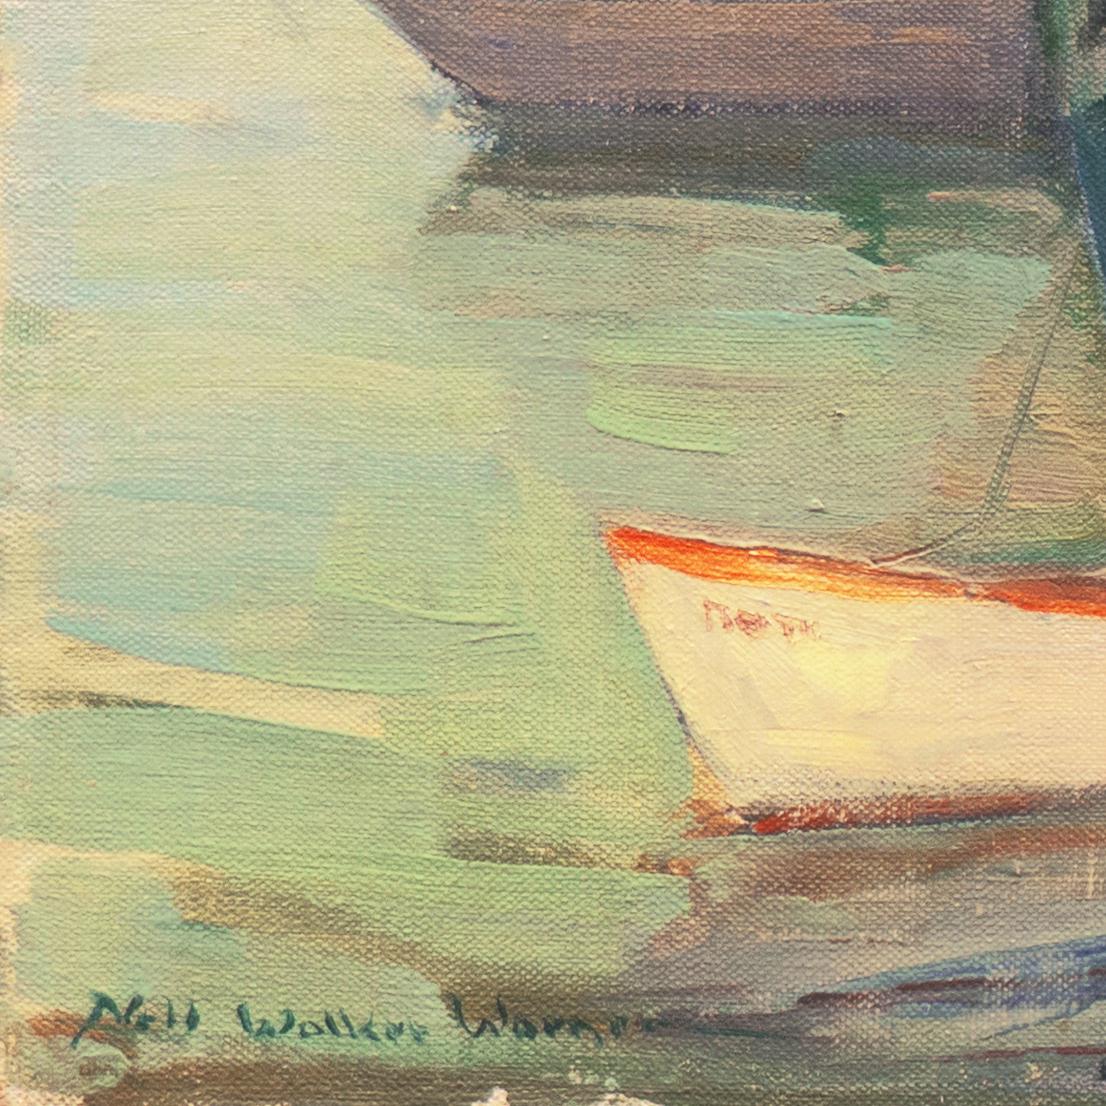 'Cape Ann Harbor', Woman Artist, Massachusetts, Rockport, Gloucester, LACMA - Painting by Nell Walker Warner